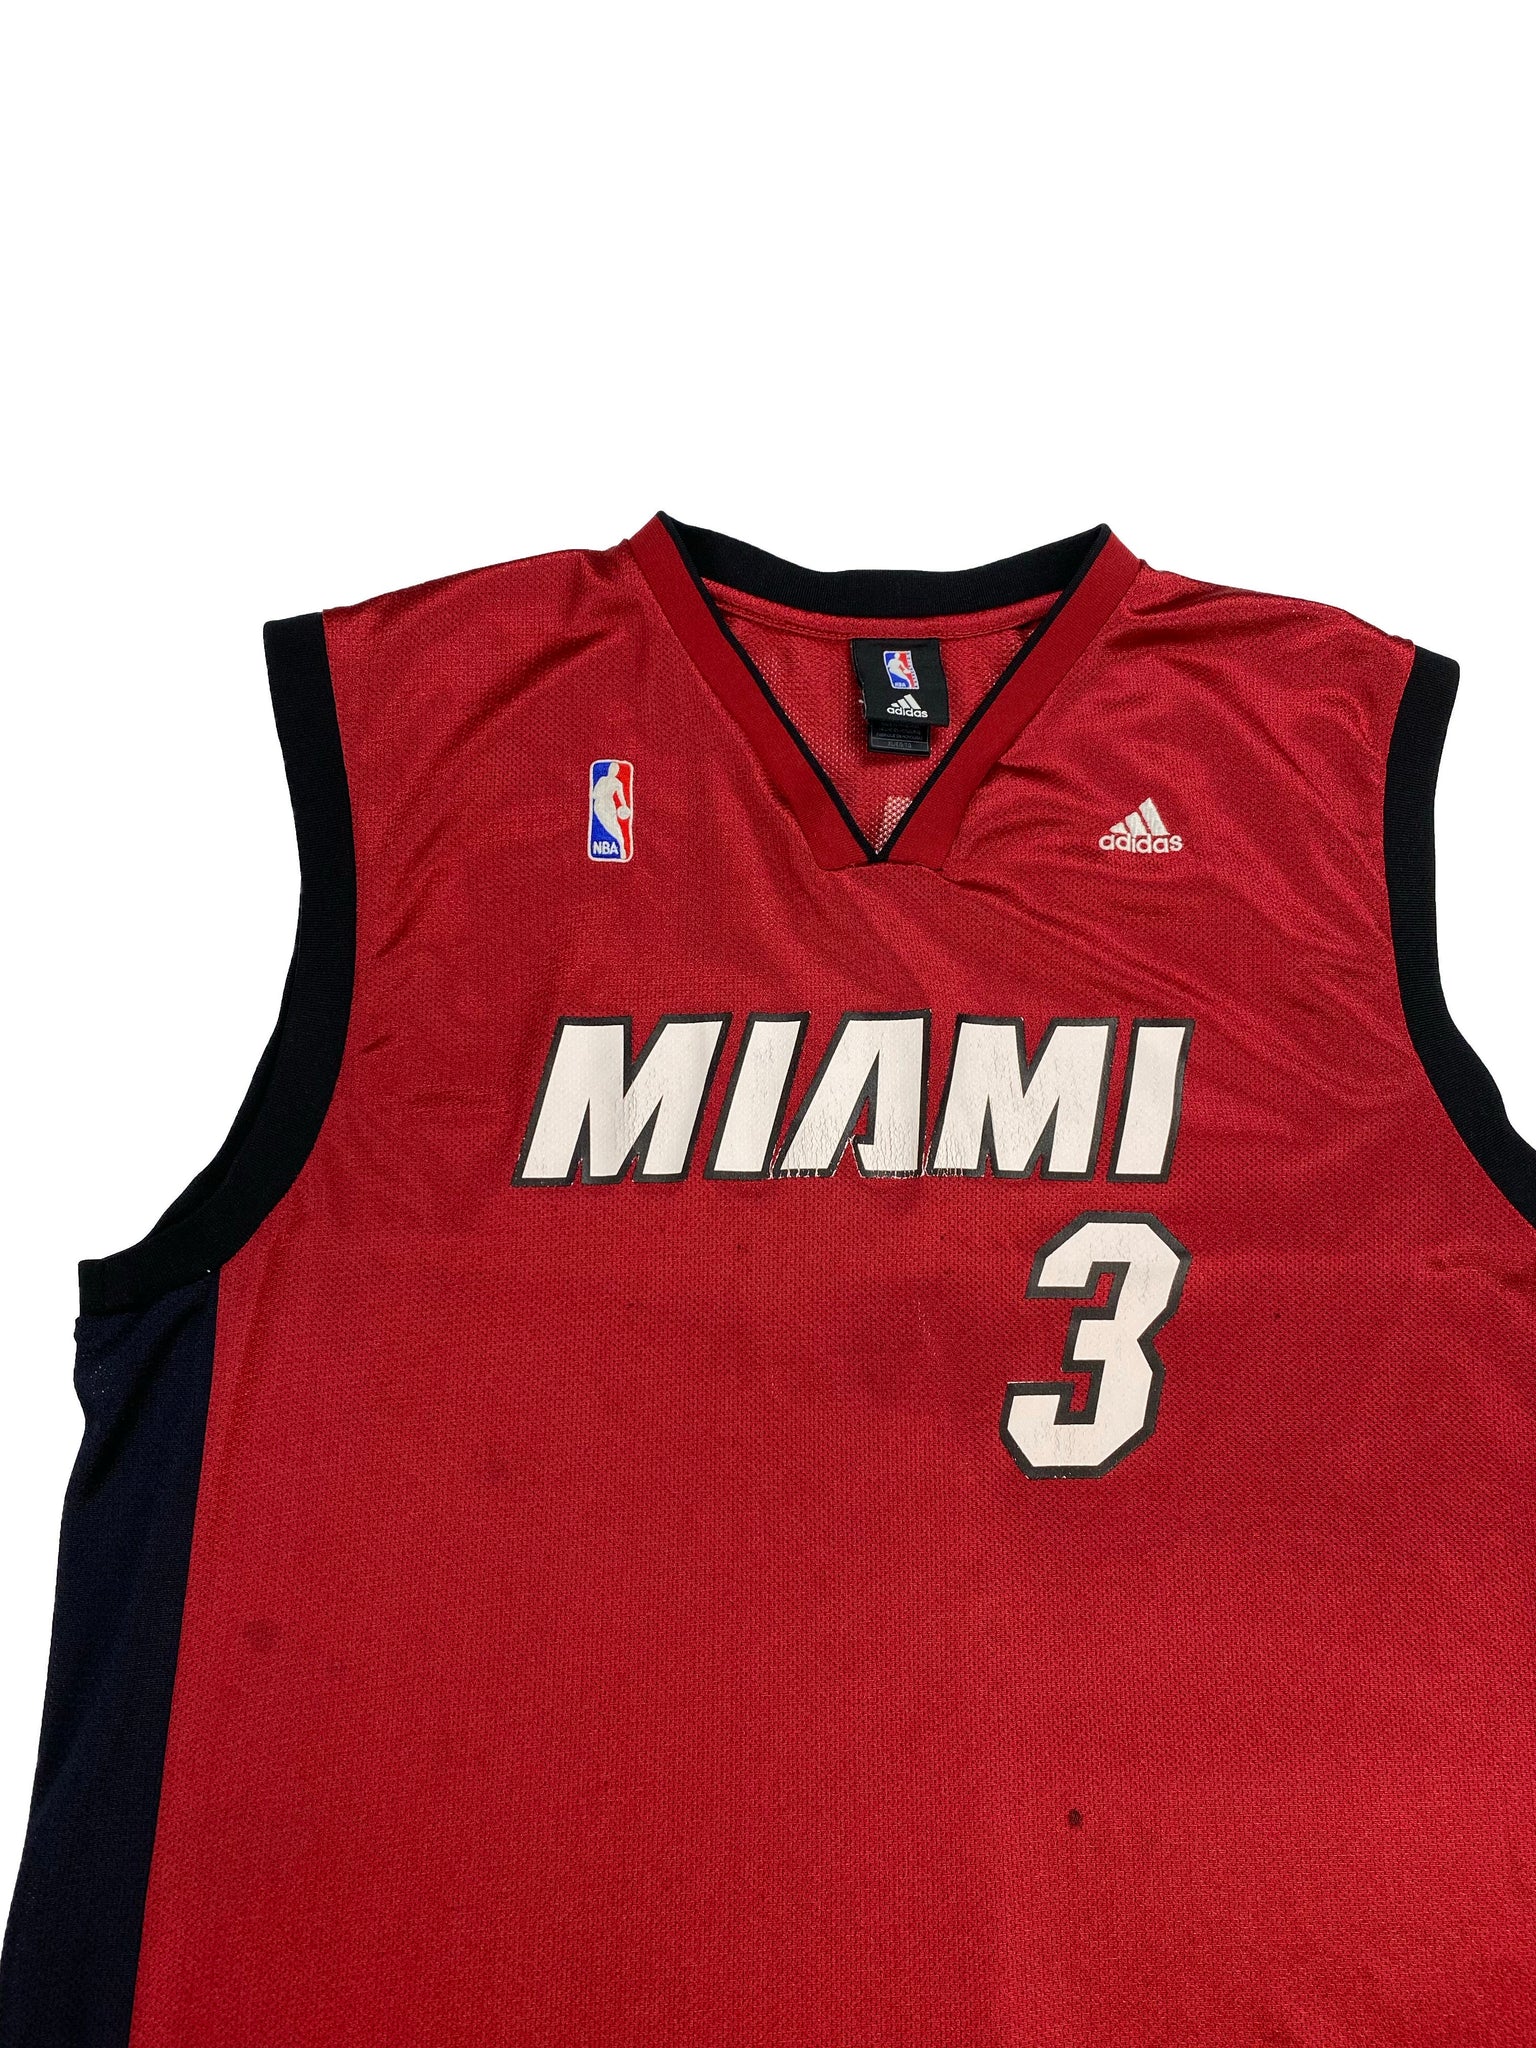 Adidas Miami Dwayne Wade NBA jersey (XL) The Recovery